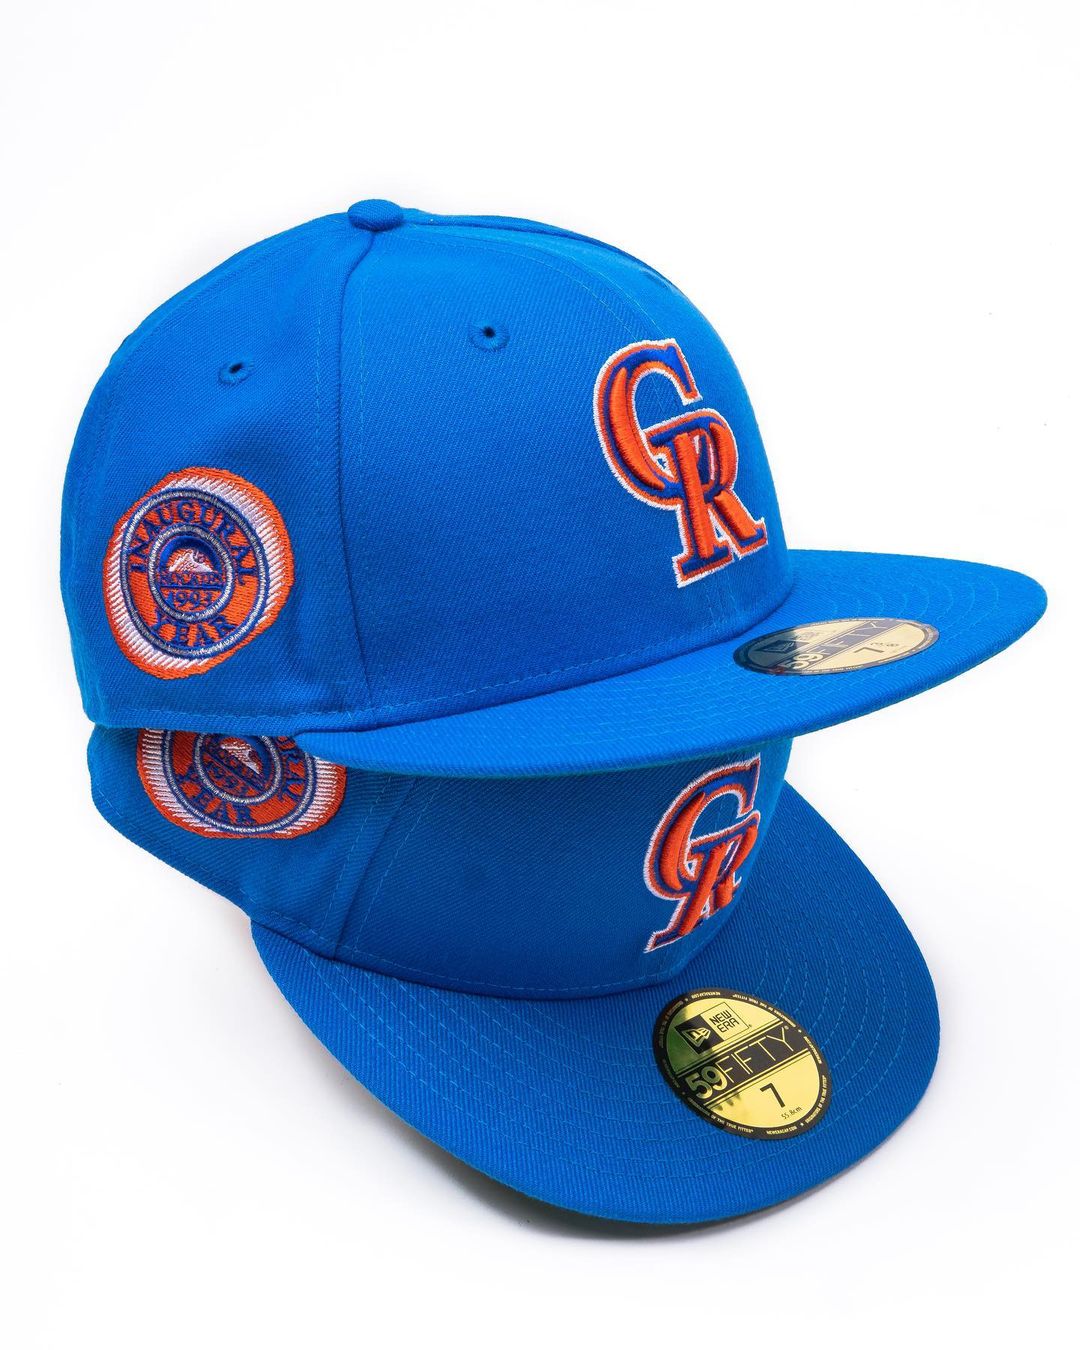 Royal Blue and Orange Colorado Rockies Baseball Cap